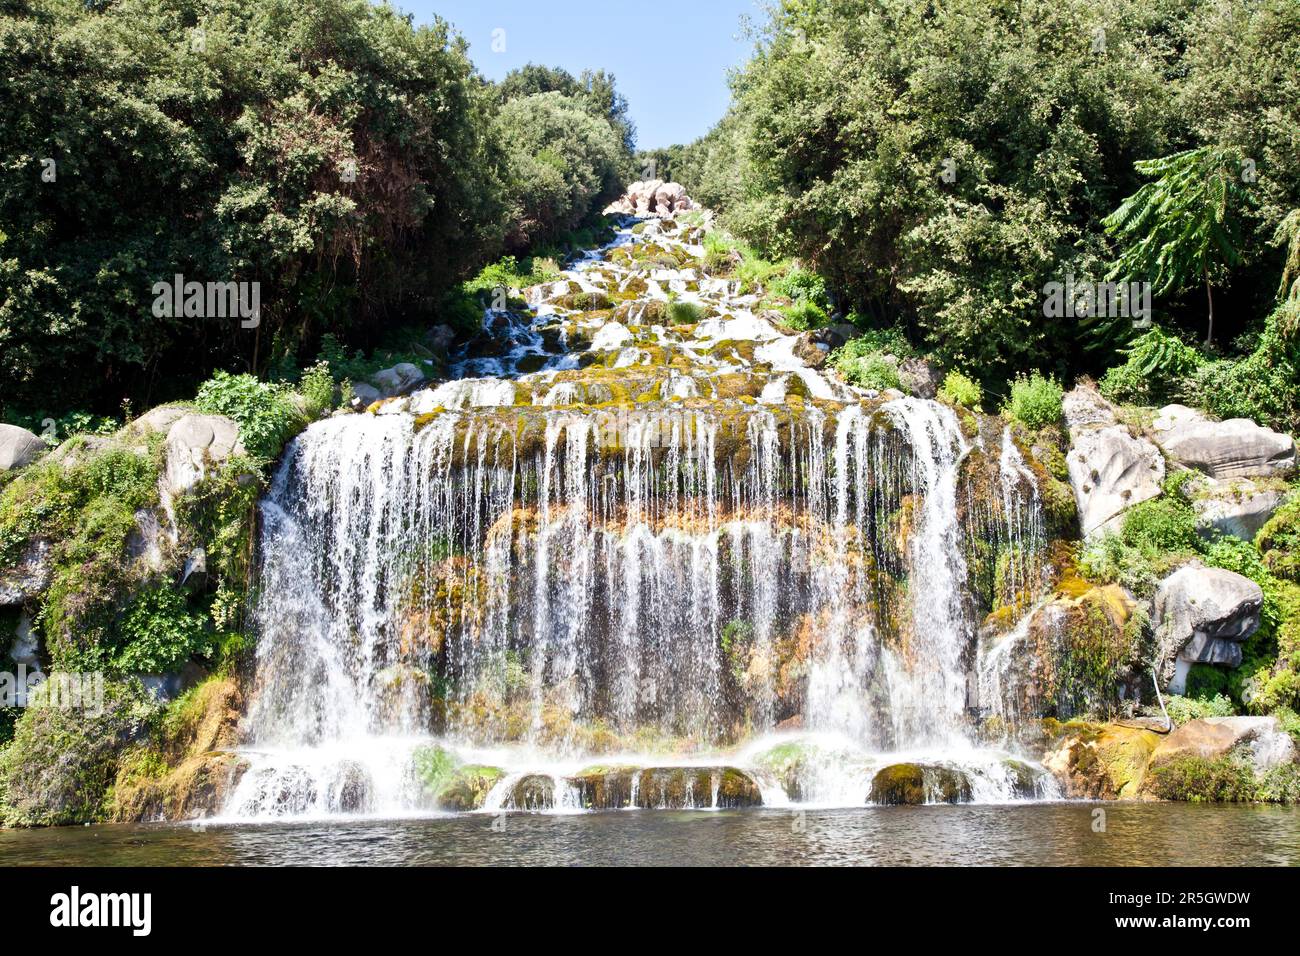 Famous Italian gardens of Reggia di Caserta, Italy Stock Photo